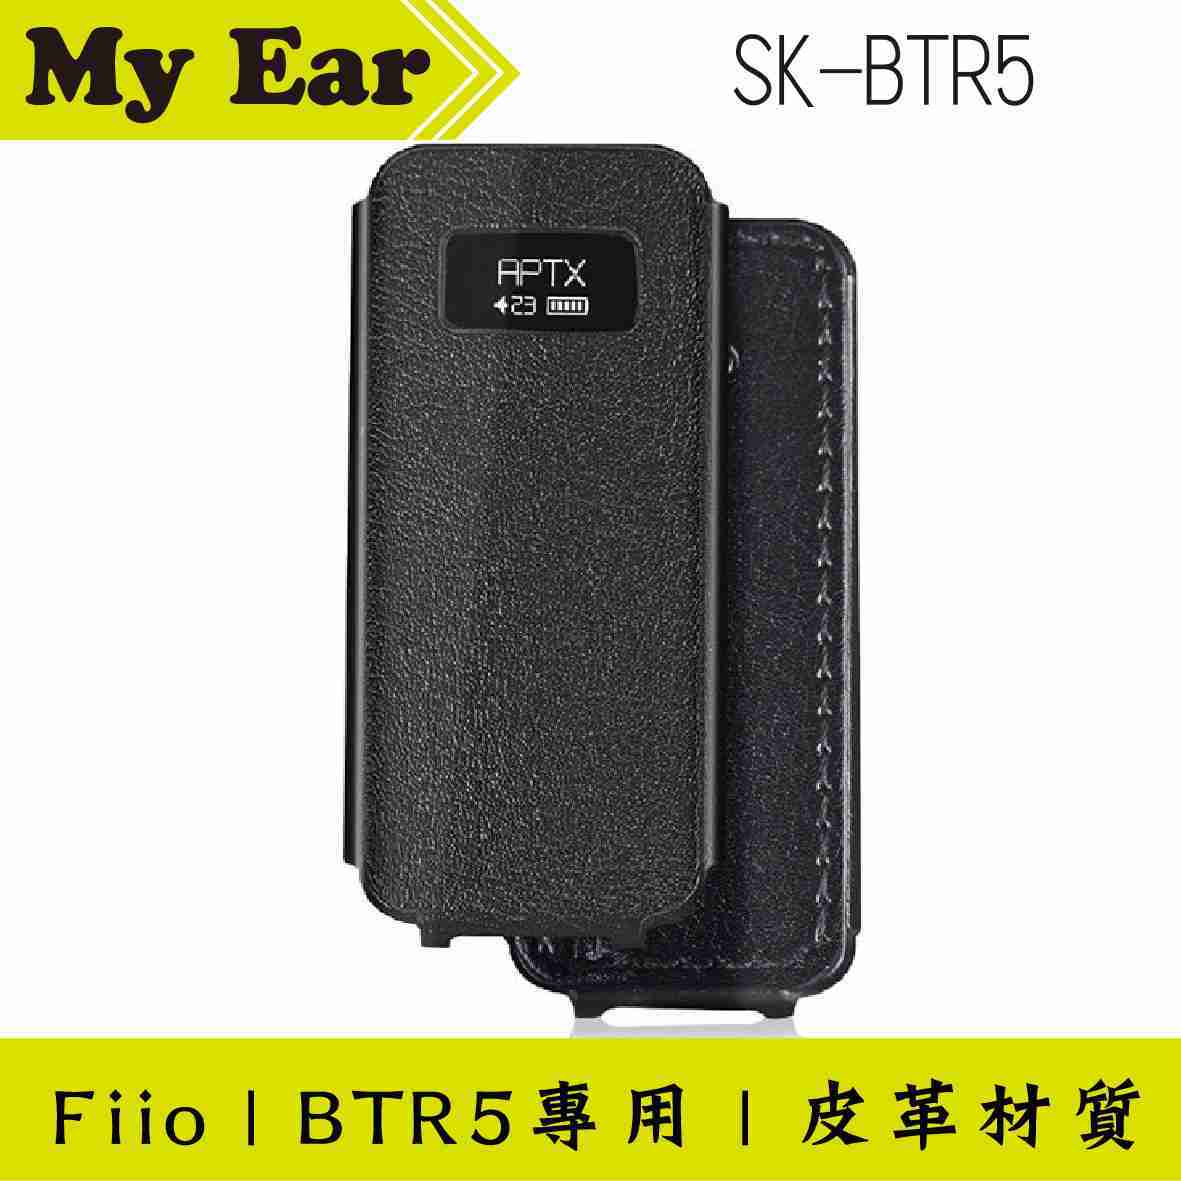 Fiio SK-BTR5 BTR5 專用 音樂接收器 皮套 | My Ear耳機專門店